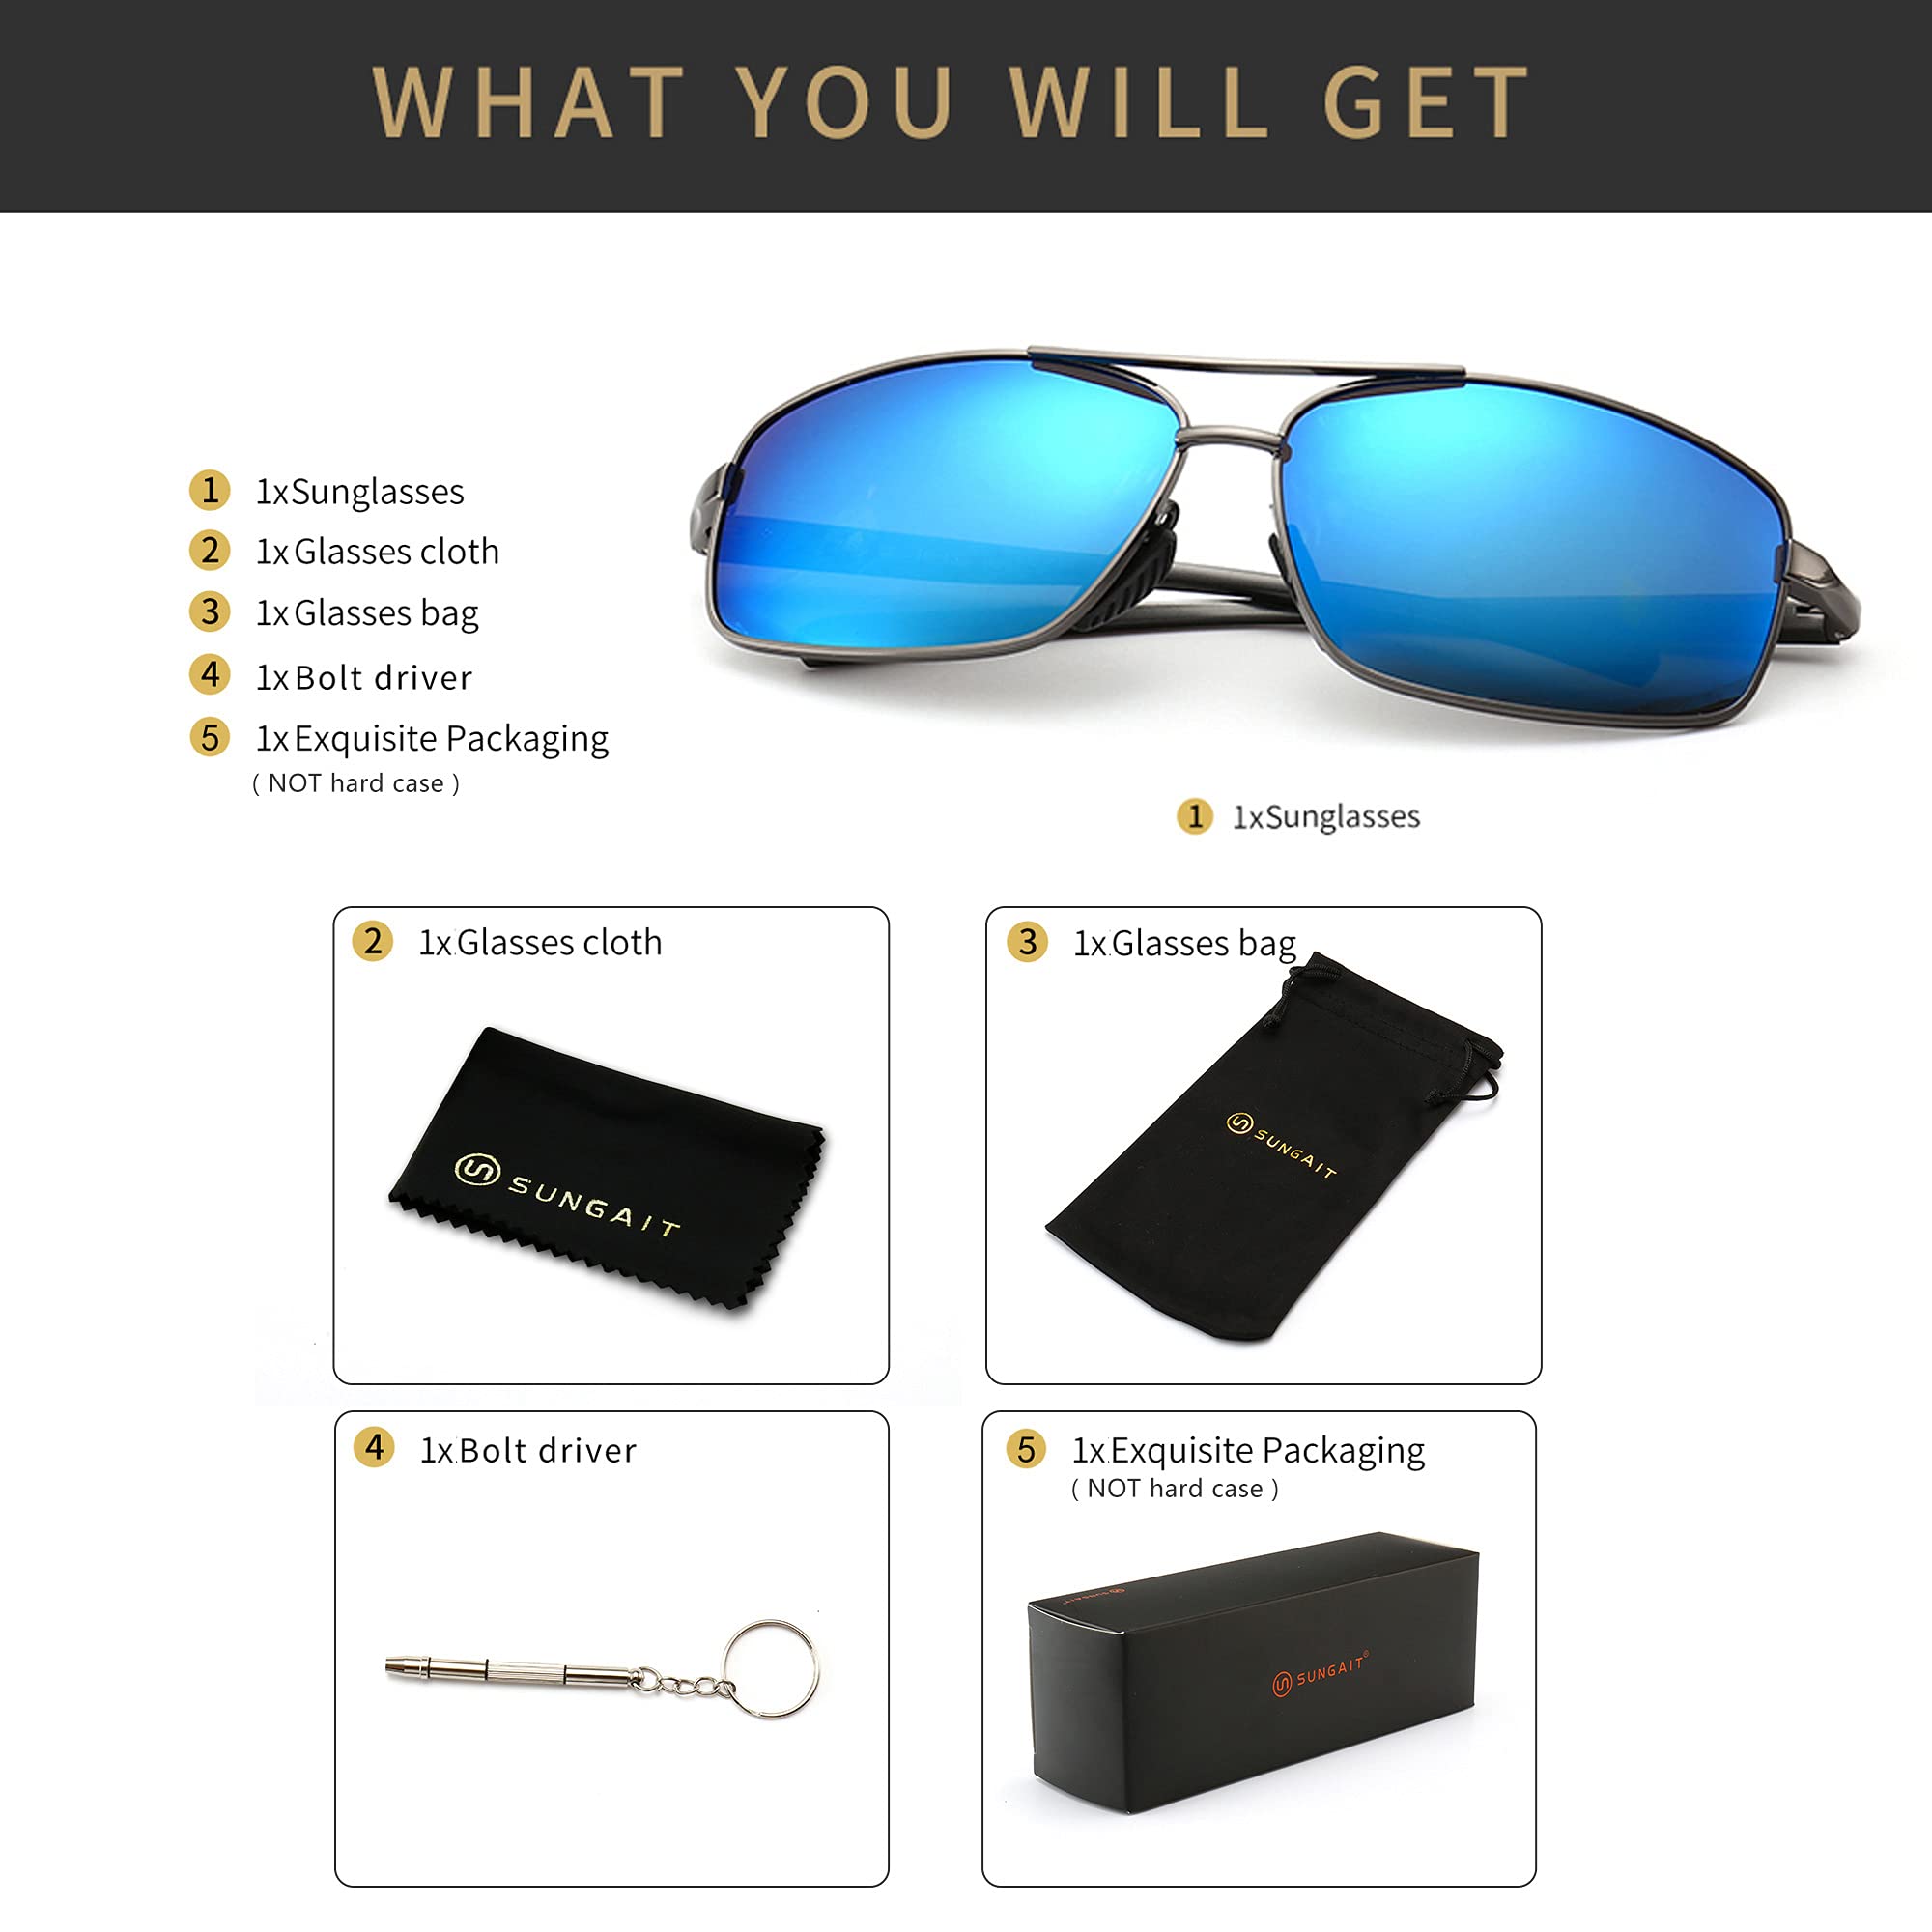 SUNGAIT Ultra Lightweight Rectangular Polarized Sunglasses UV400 Protection